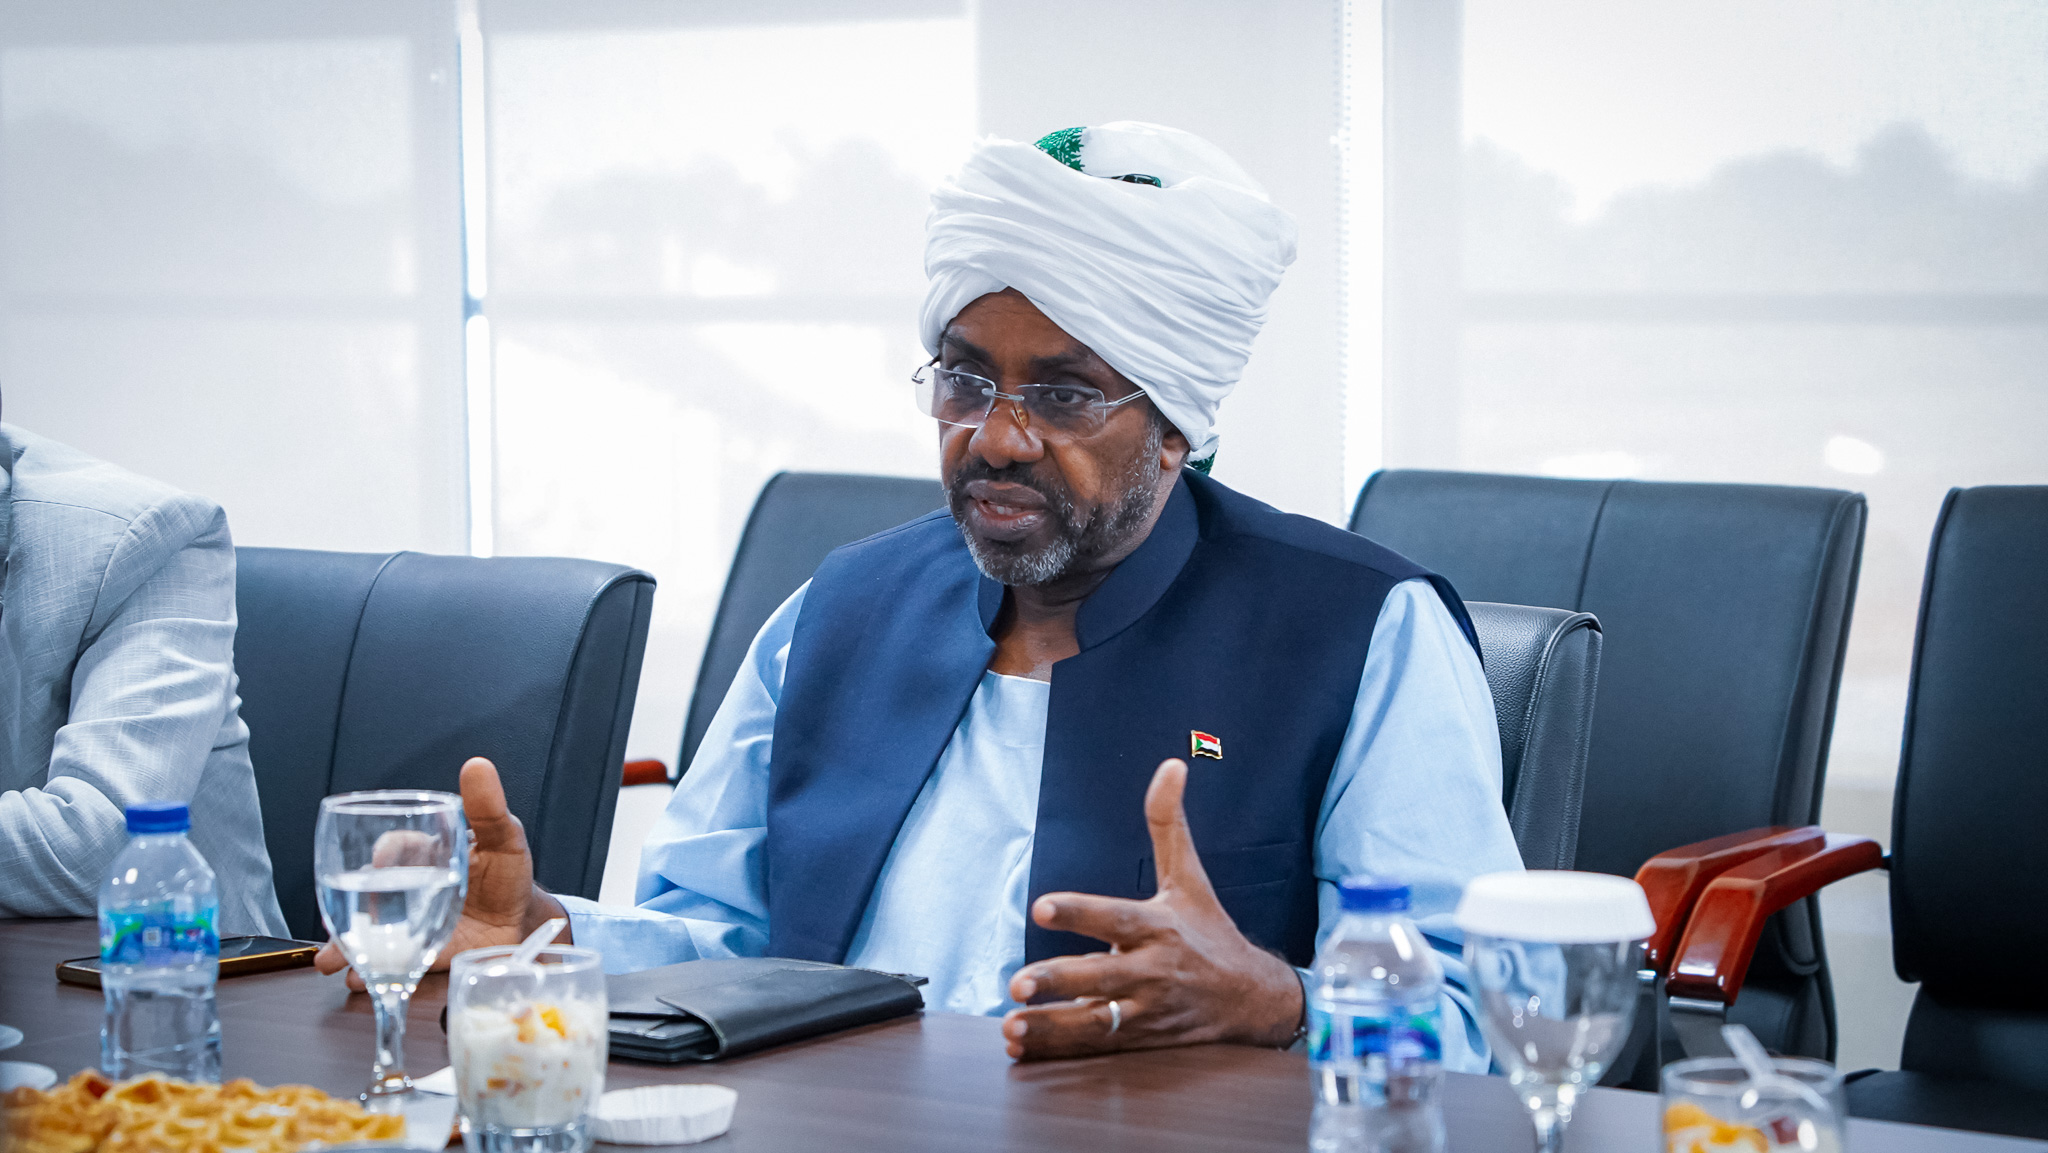 The Ambassador of Sudan in Indonesia will establish bridges for the partnership with UIII